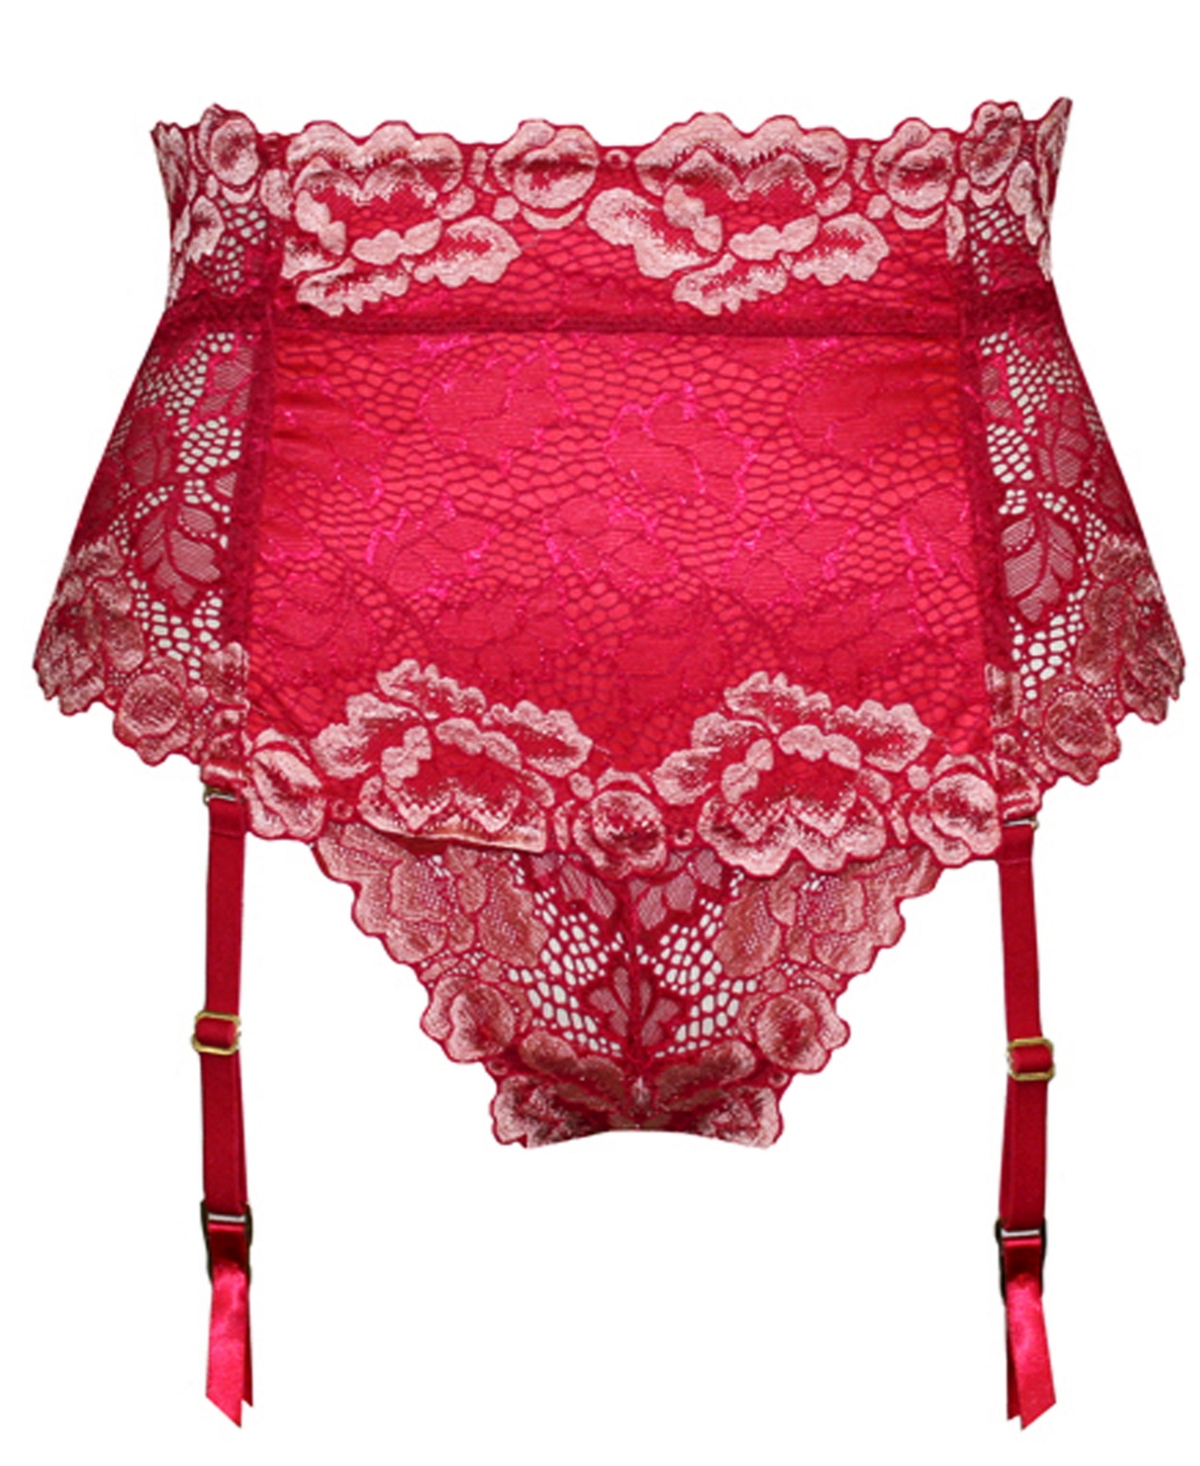 iCollection Plus Size Hi-Waist Garter Thong 2pc Lingerie Set